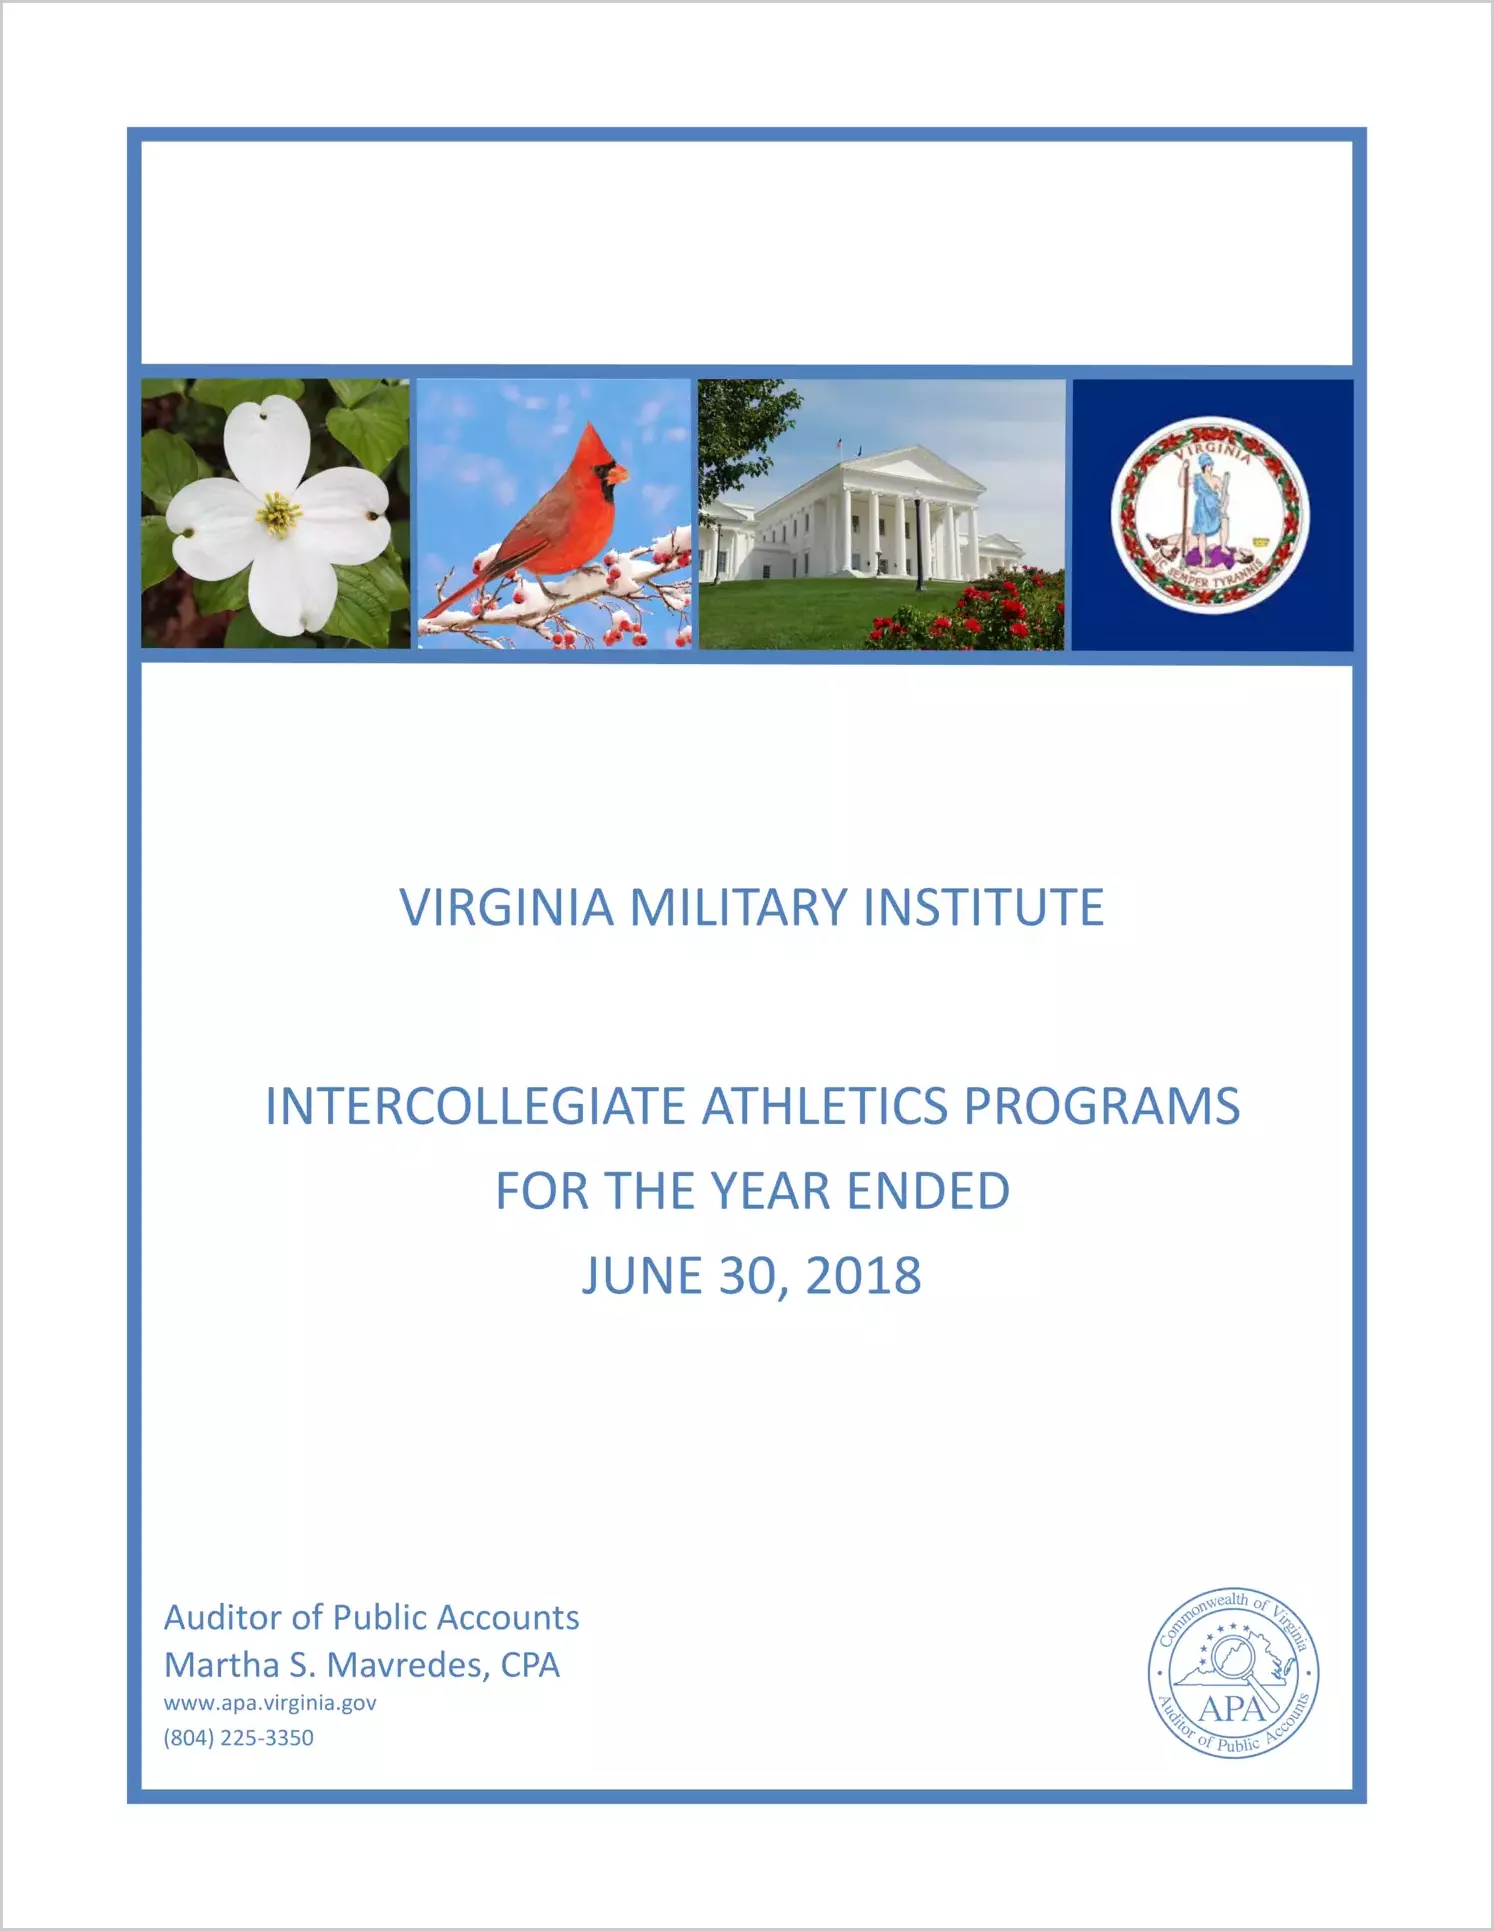 Virginia Military Institute Intercollegiate Athletics Programs for the year ended June 30, 2018